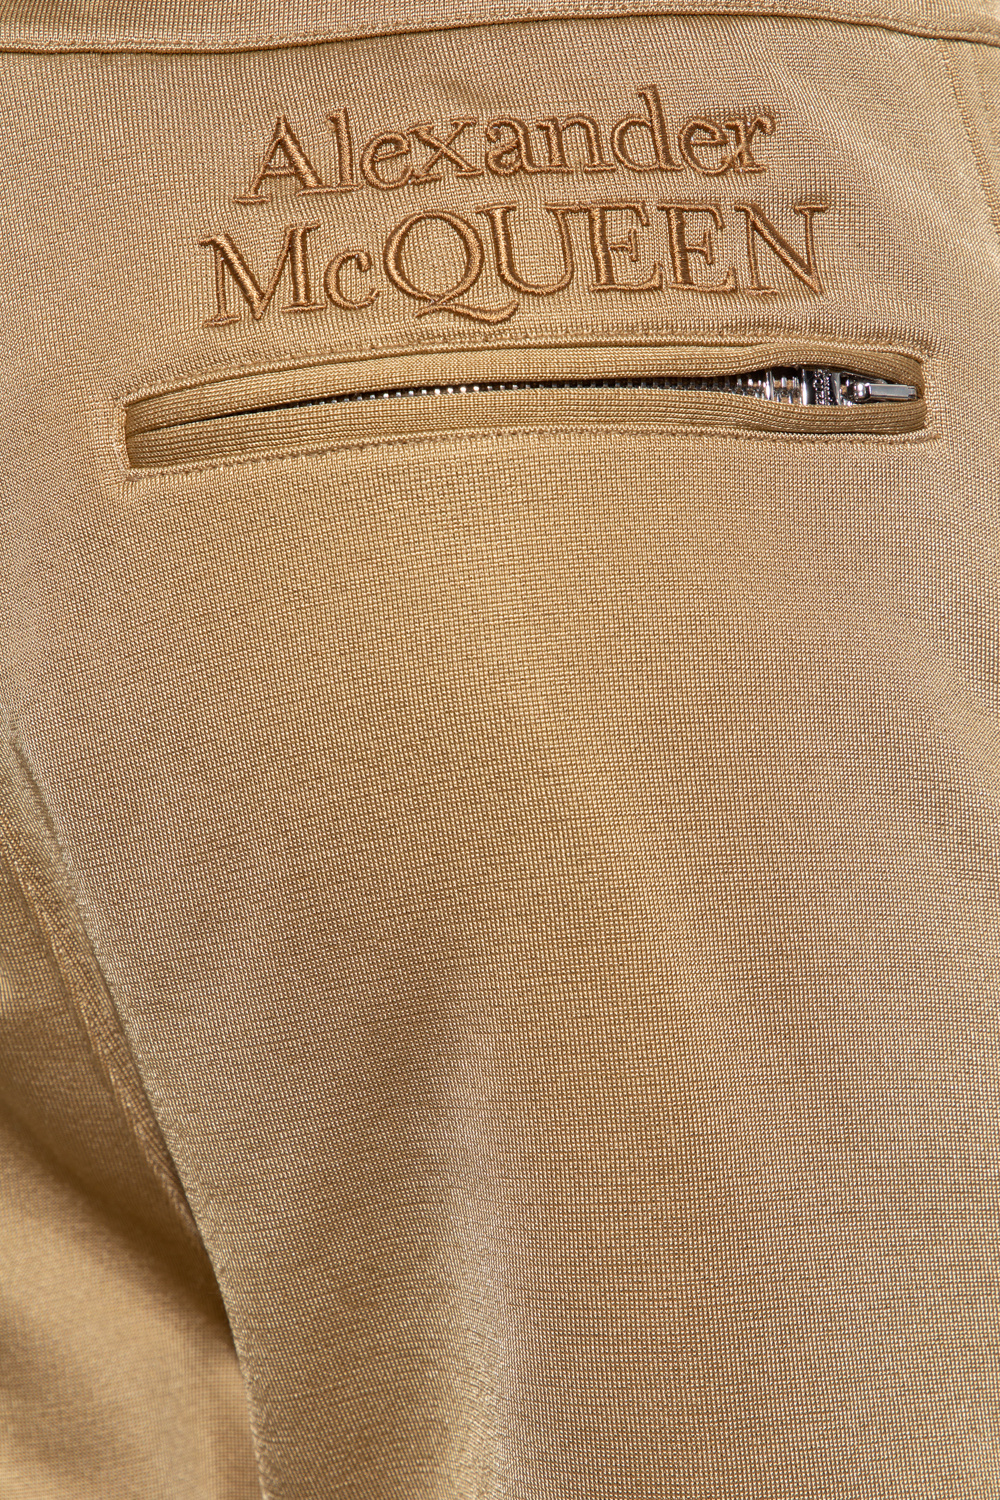 Alexander McQueen trousers Waist with logo